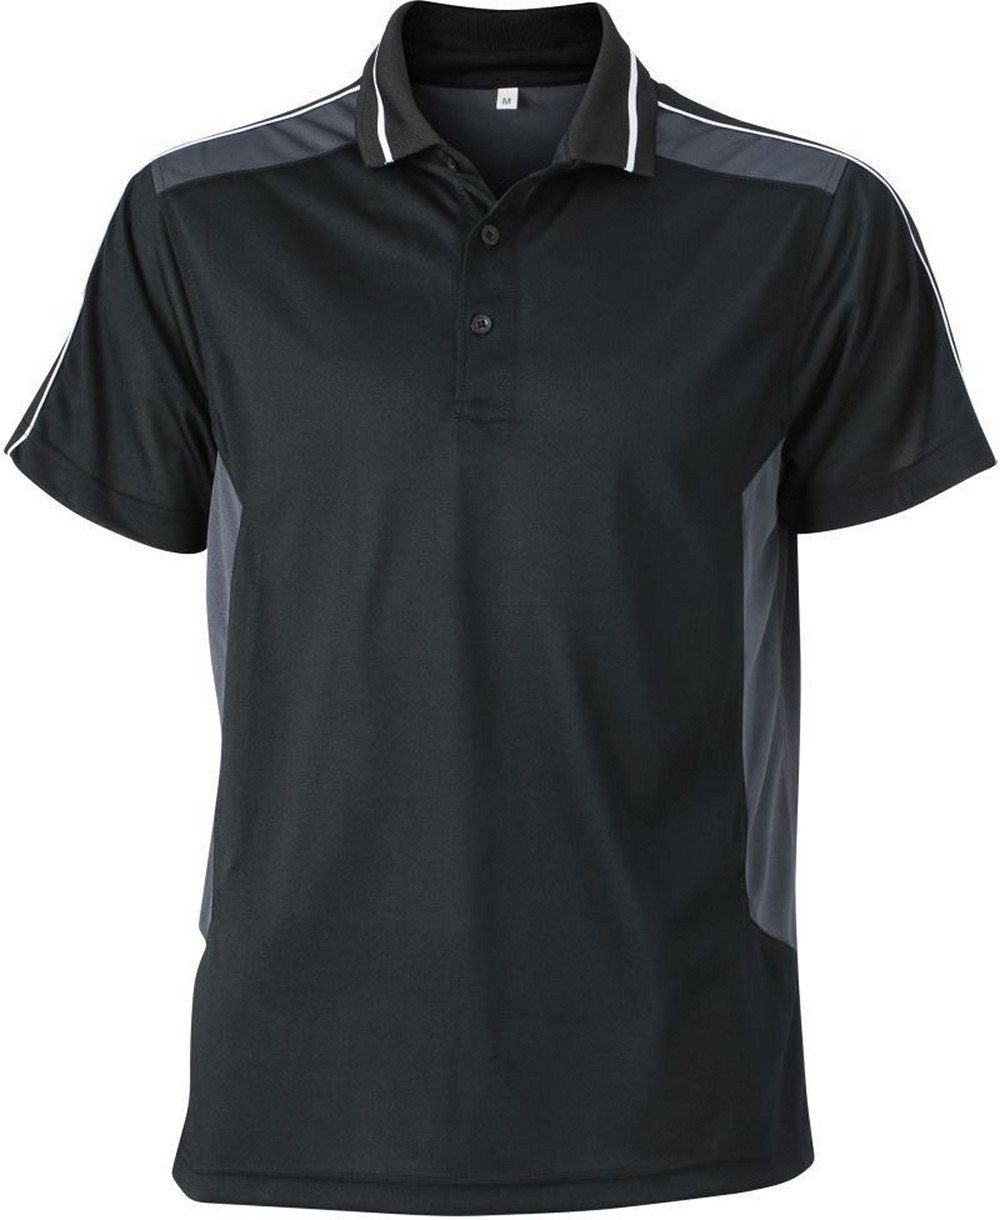 James & Nicholson Poloshirt JN 828 Herren Workwear Piqué Polo schwarz | Poloshirts